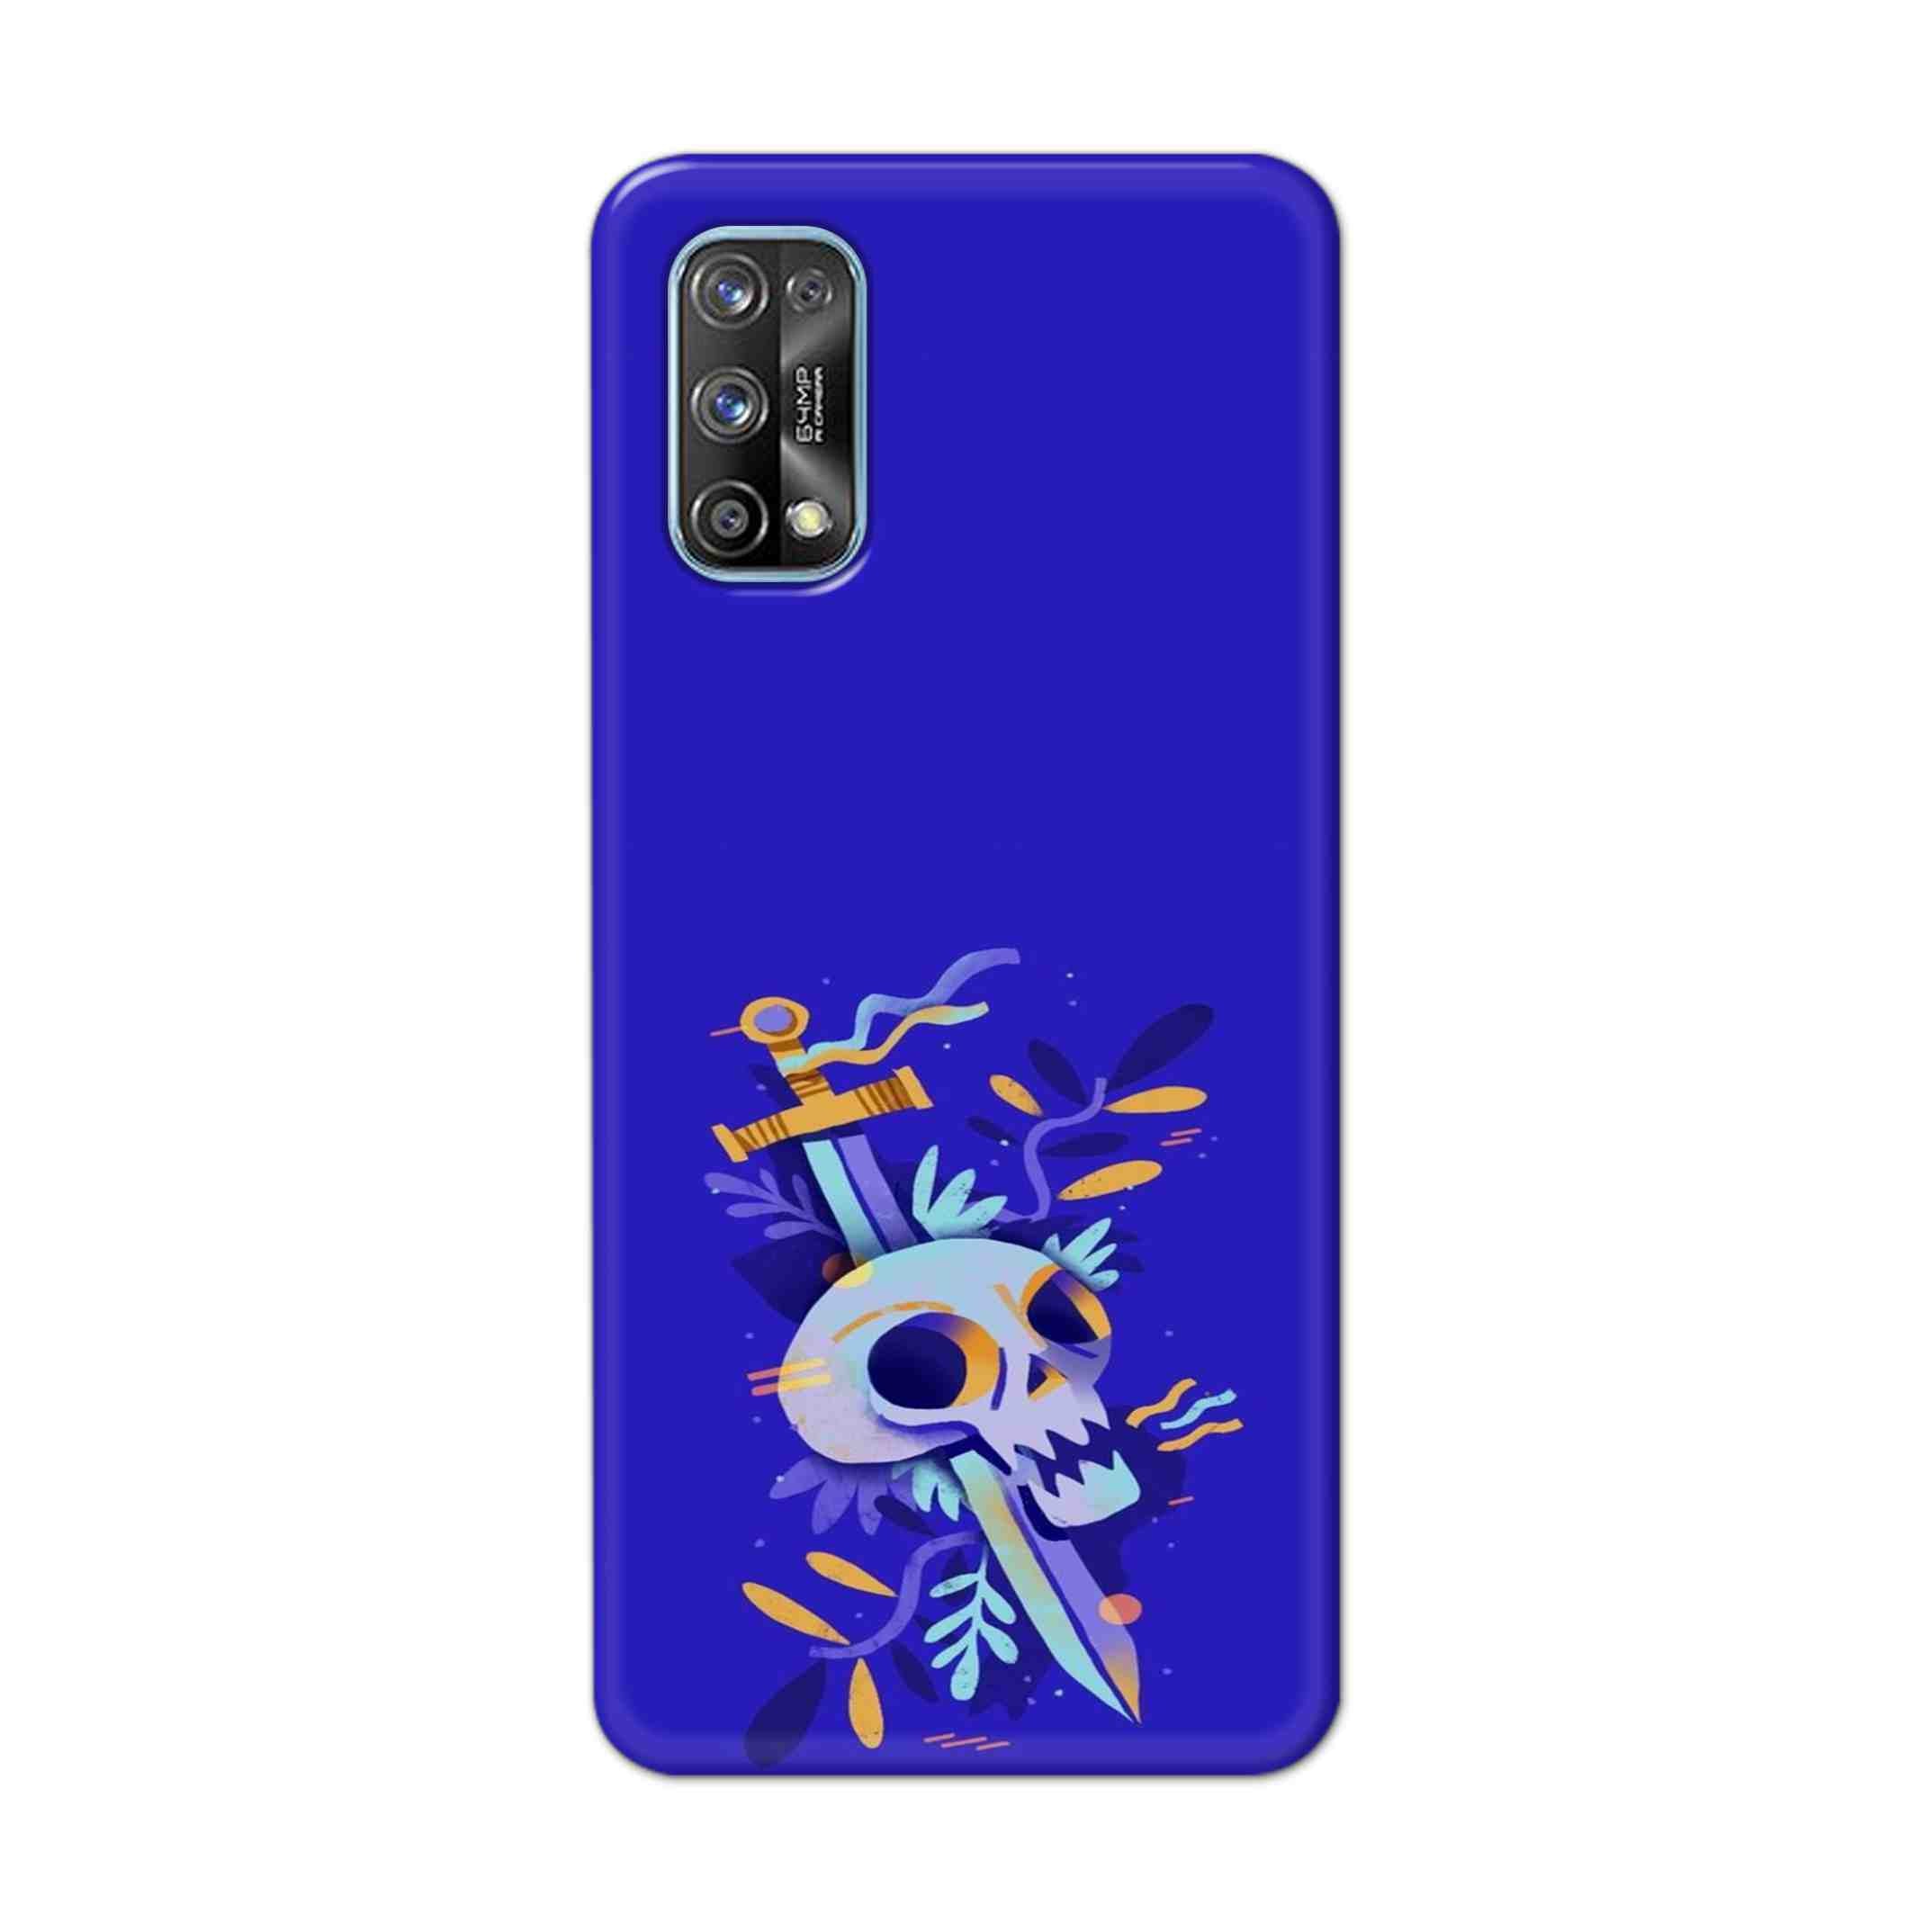 Buy Blue Skull Hard Back Mobile Phone Case Cover For Realme 7 Pro Online